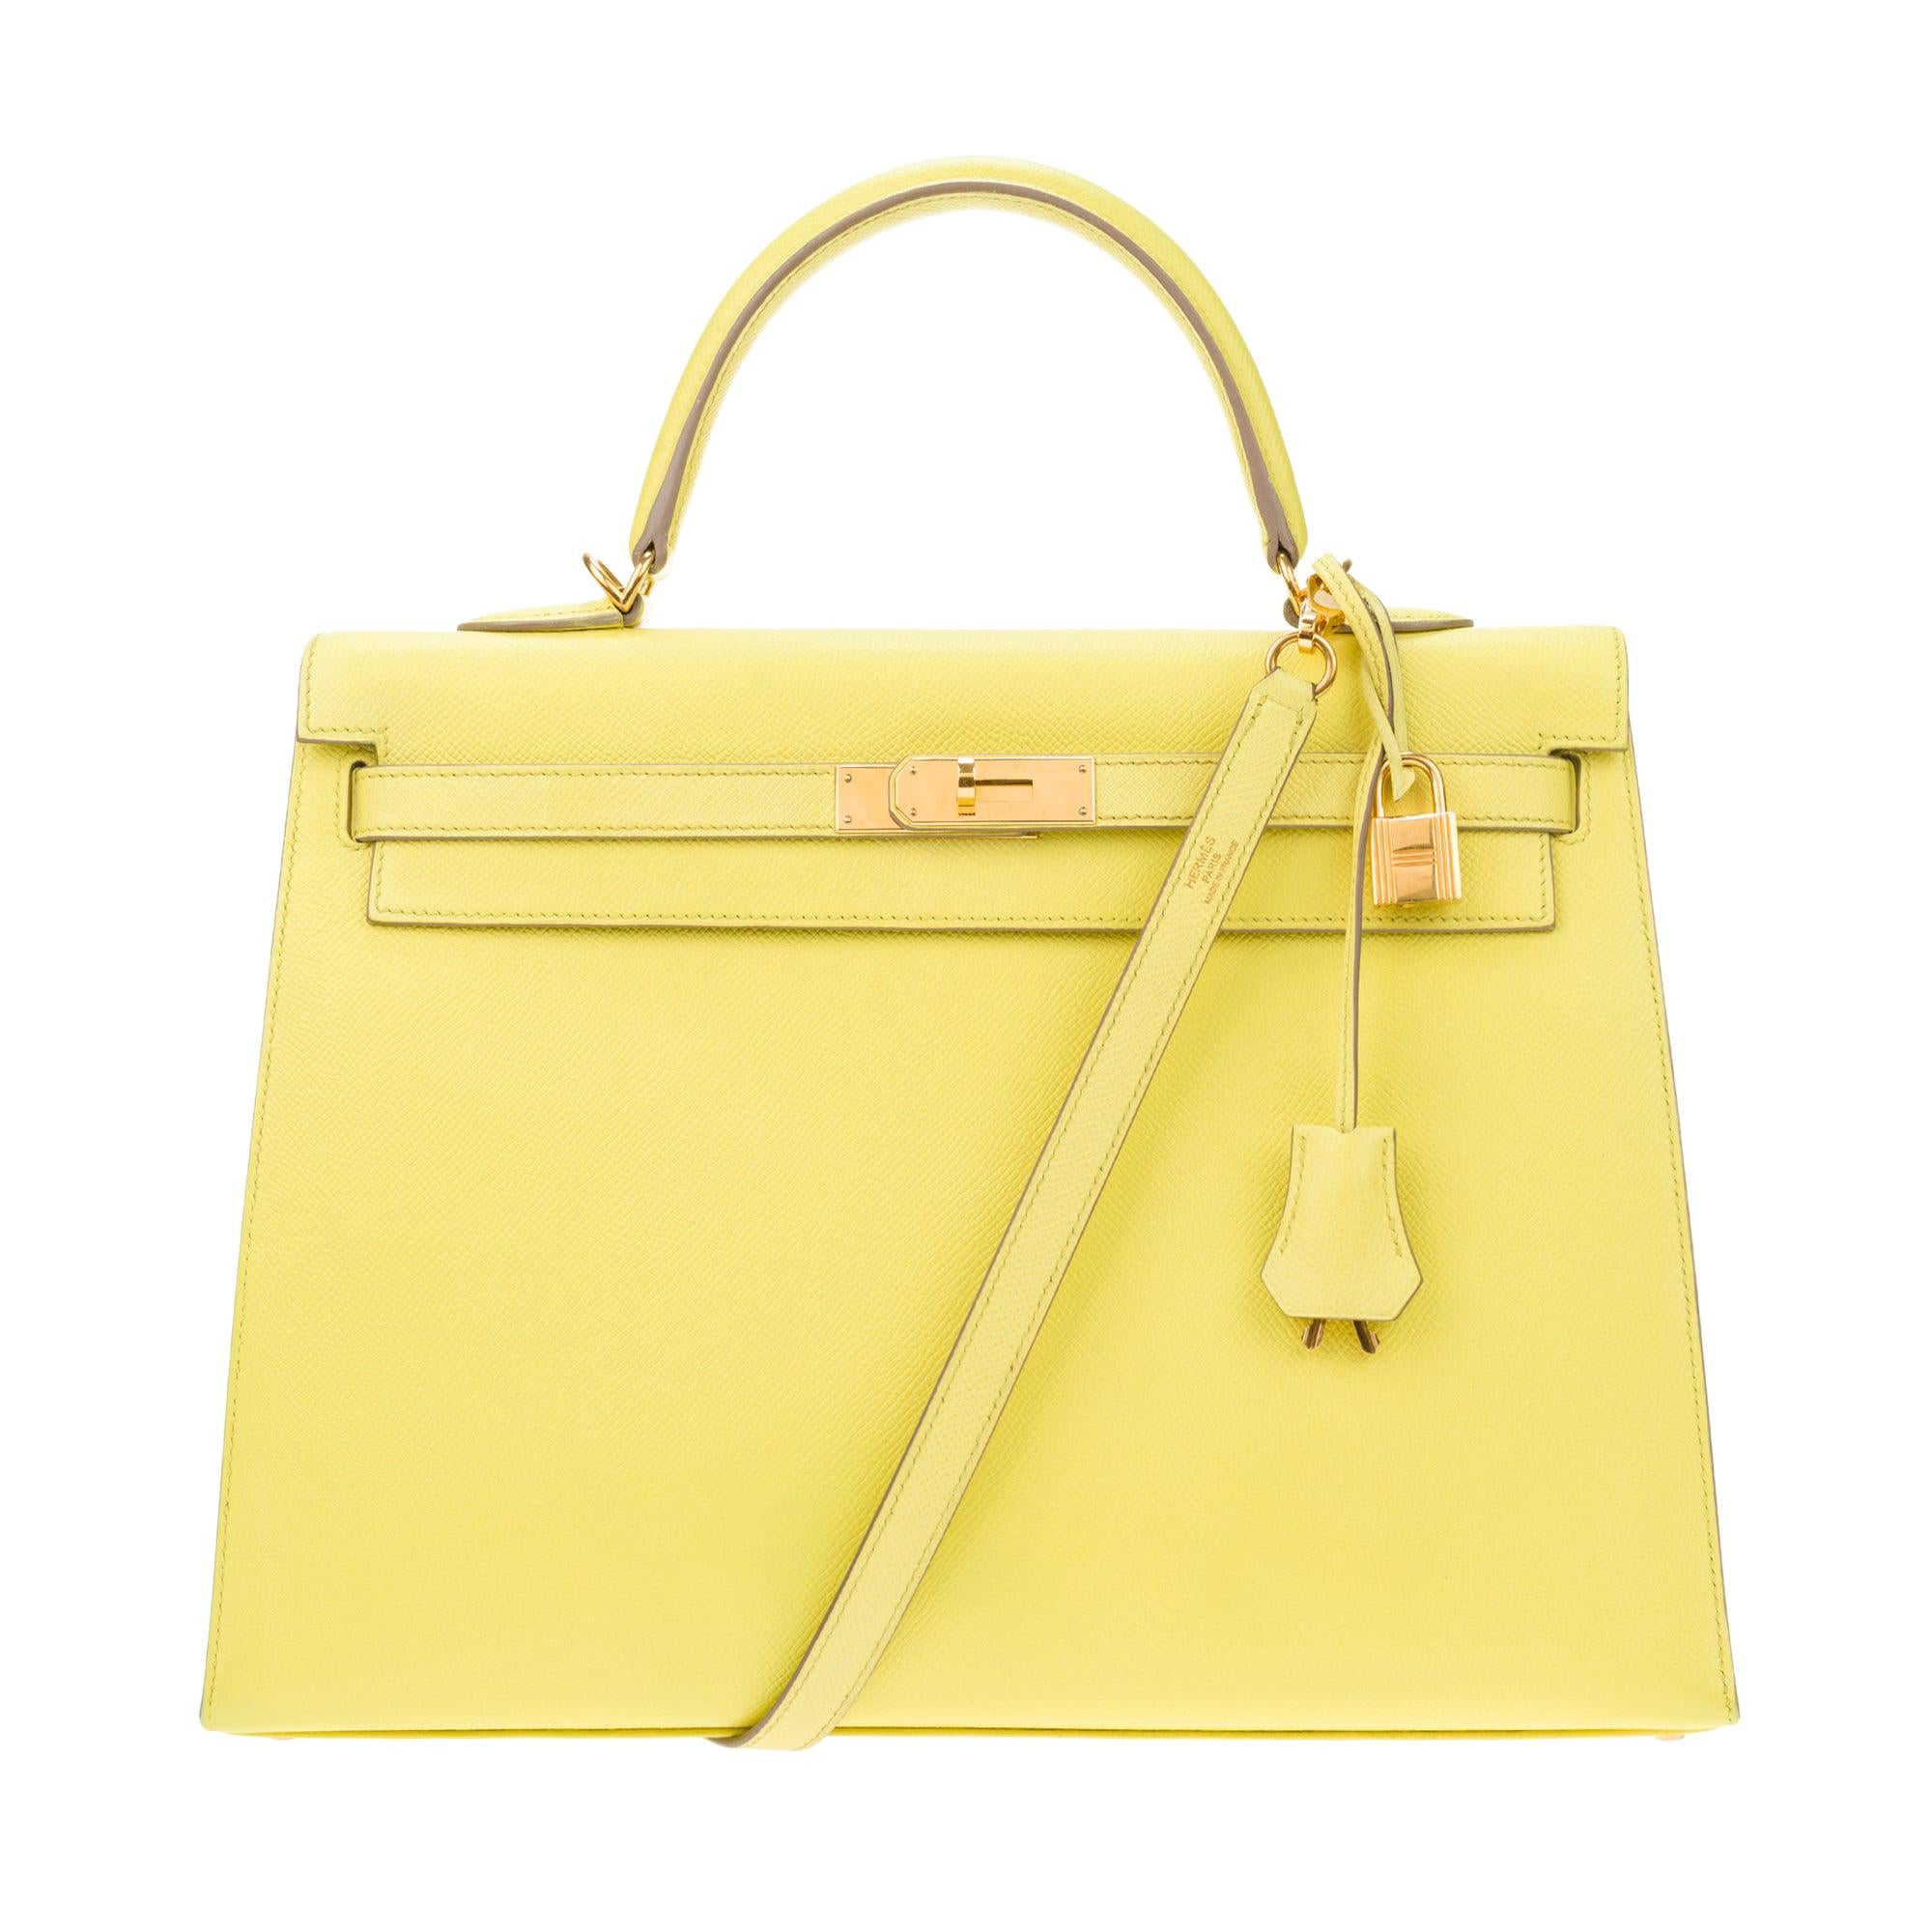 Amazing Hermès Kelly 35 handbag with strap in epsom yellow lemon color, GHW !